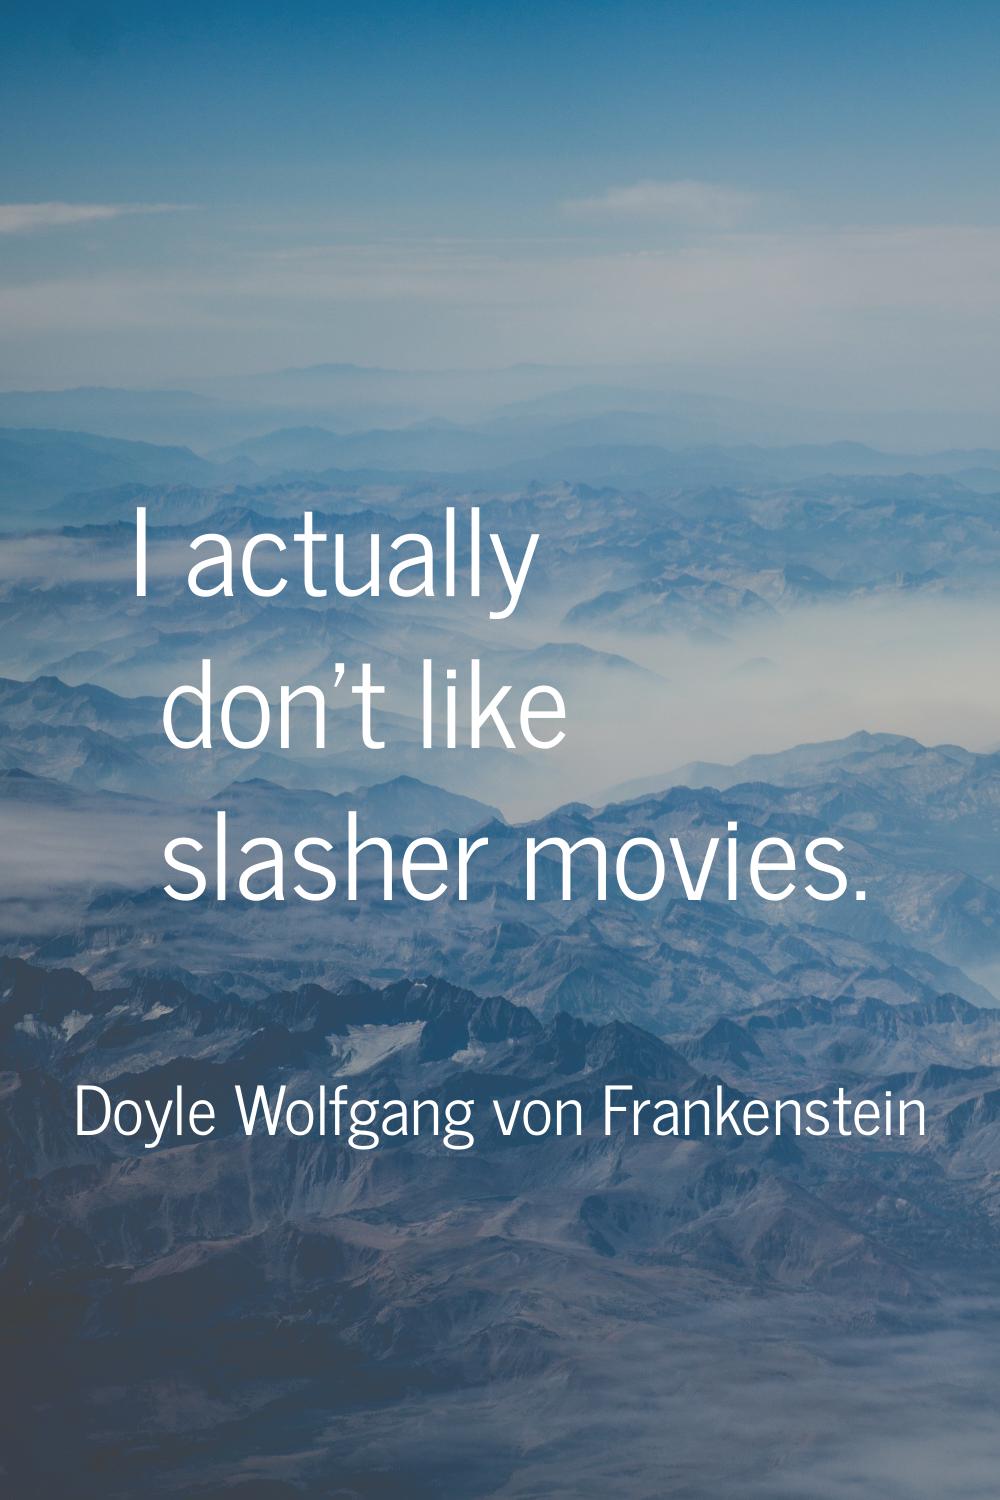 I actually don't like slasher movies.